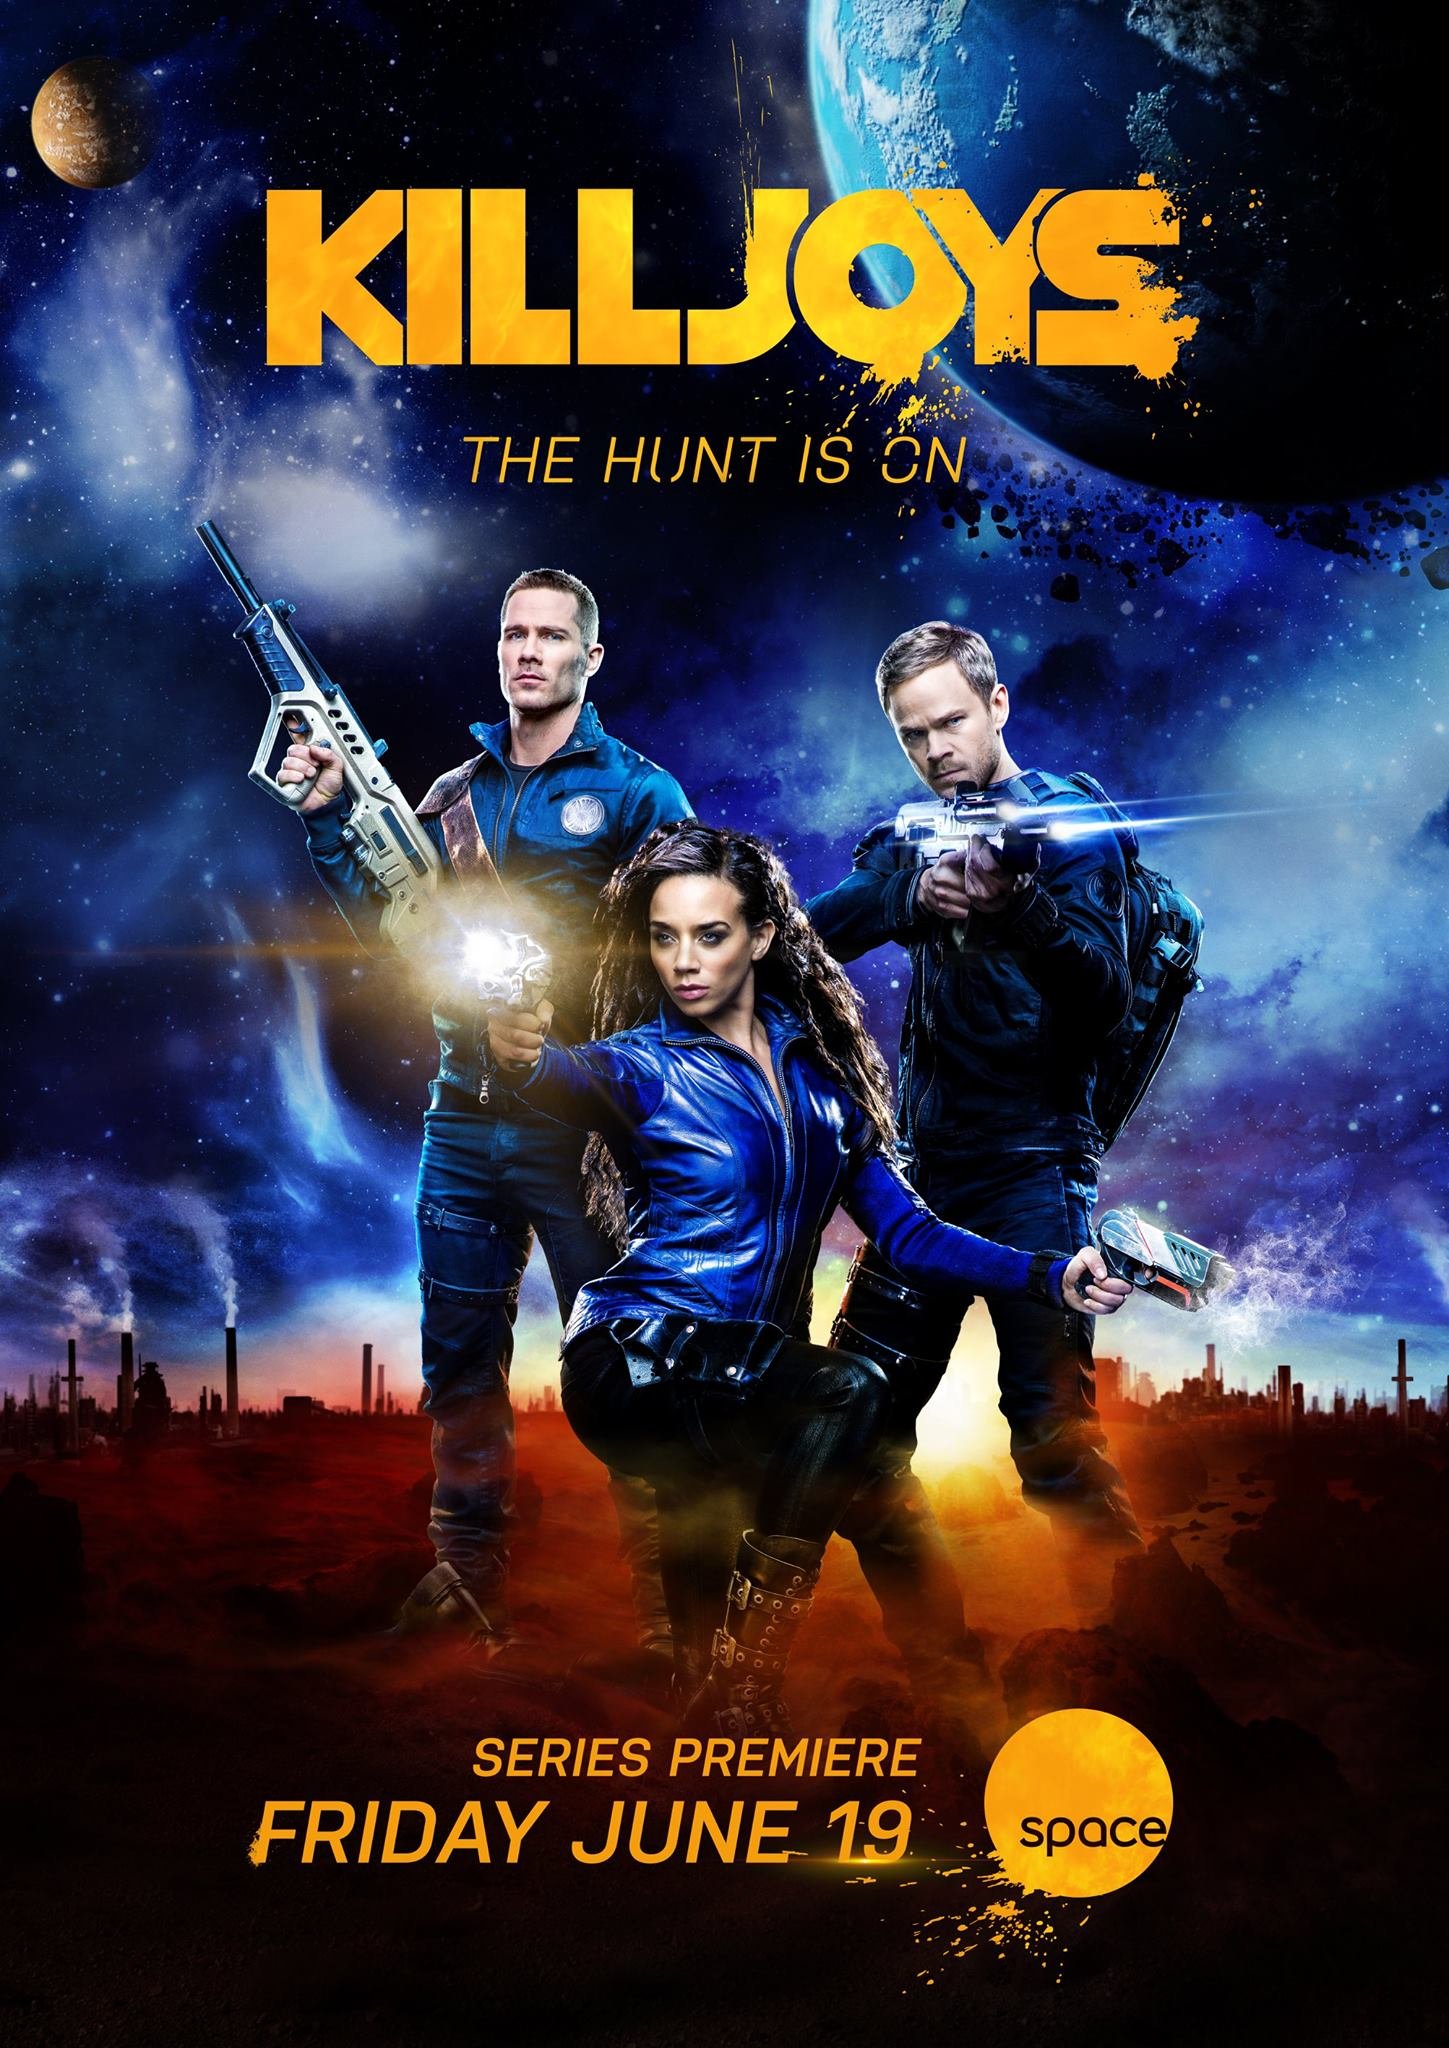 Poster of the movie Killjoys